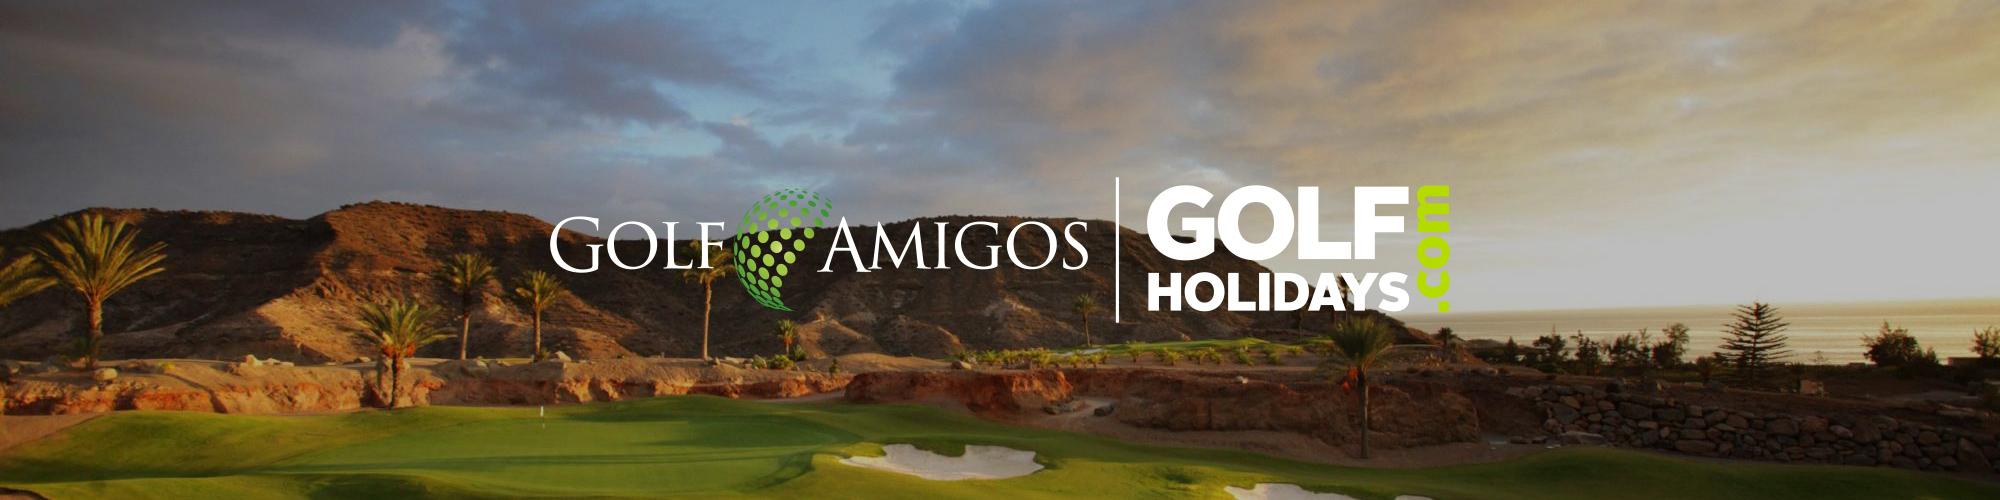 Golf Amigos Golf Holidays Header